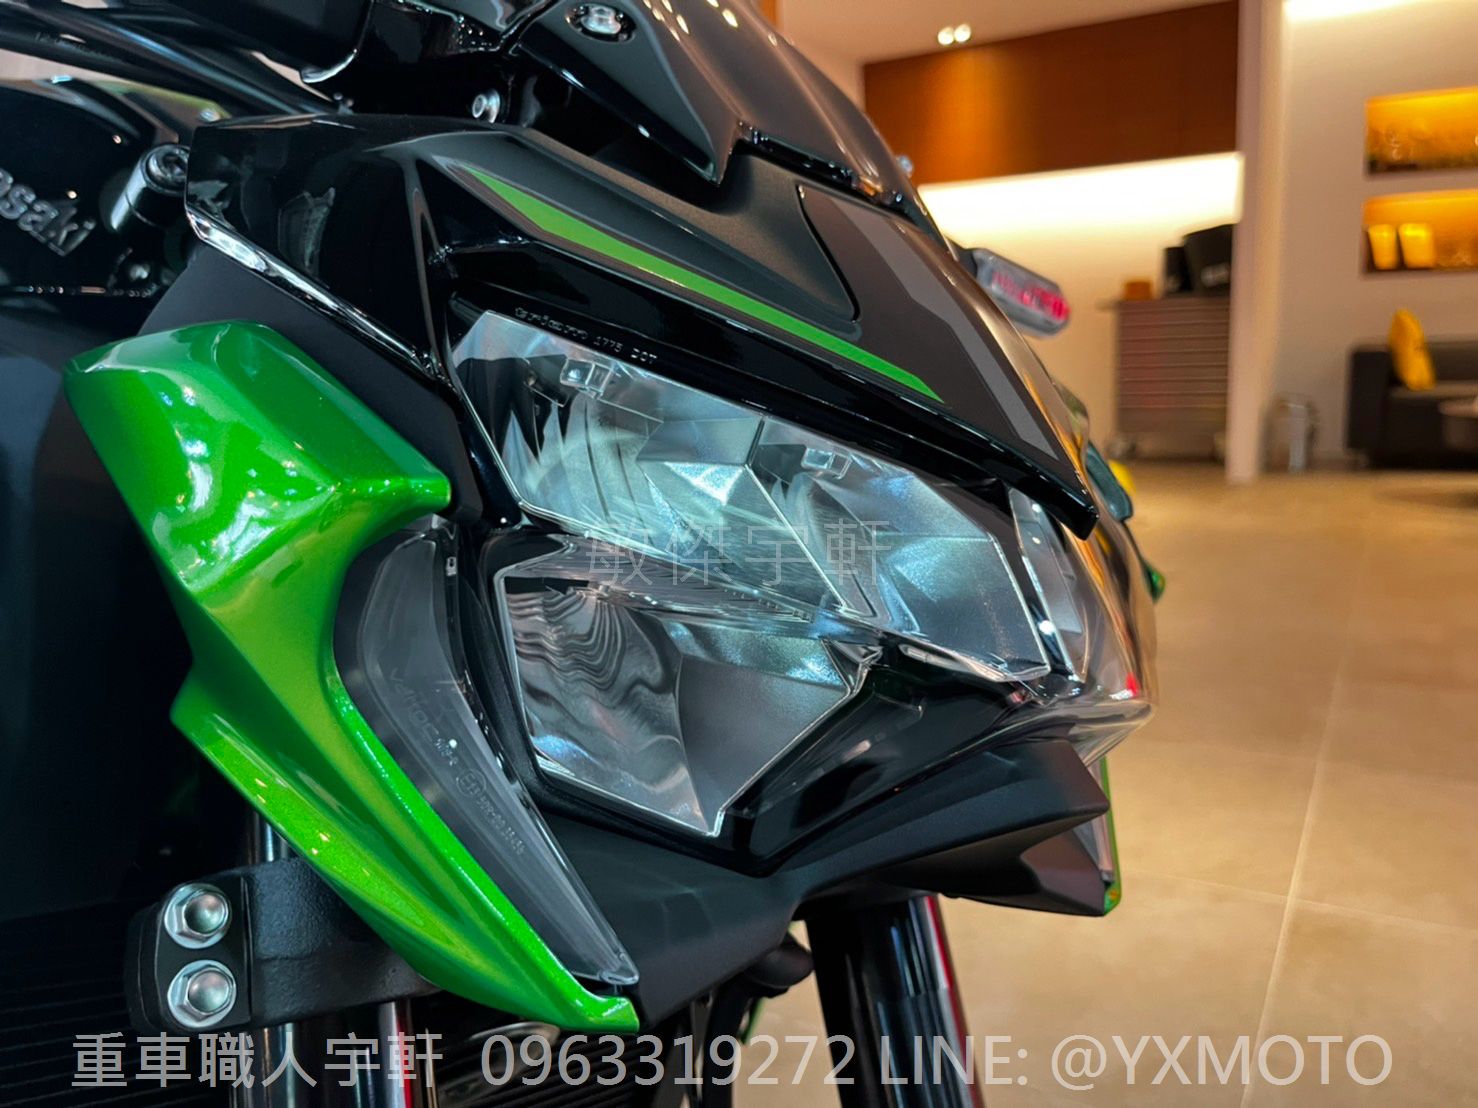 KAWASAKI Z900新車出售中 【敏傑宇軒】2022 KAWASAKI Z900 黑綠色 總代理公司車 全額零利率 | 重車銷售職人-宇軒 (敏傑)